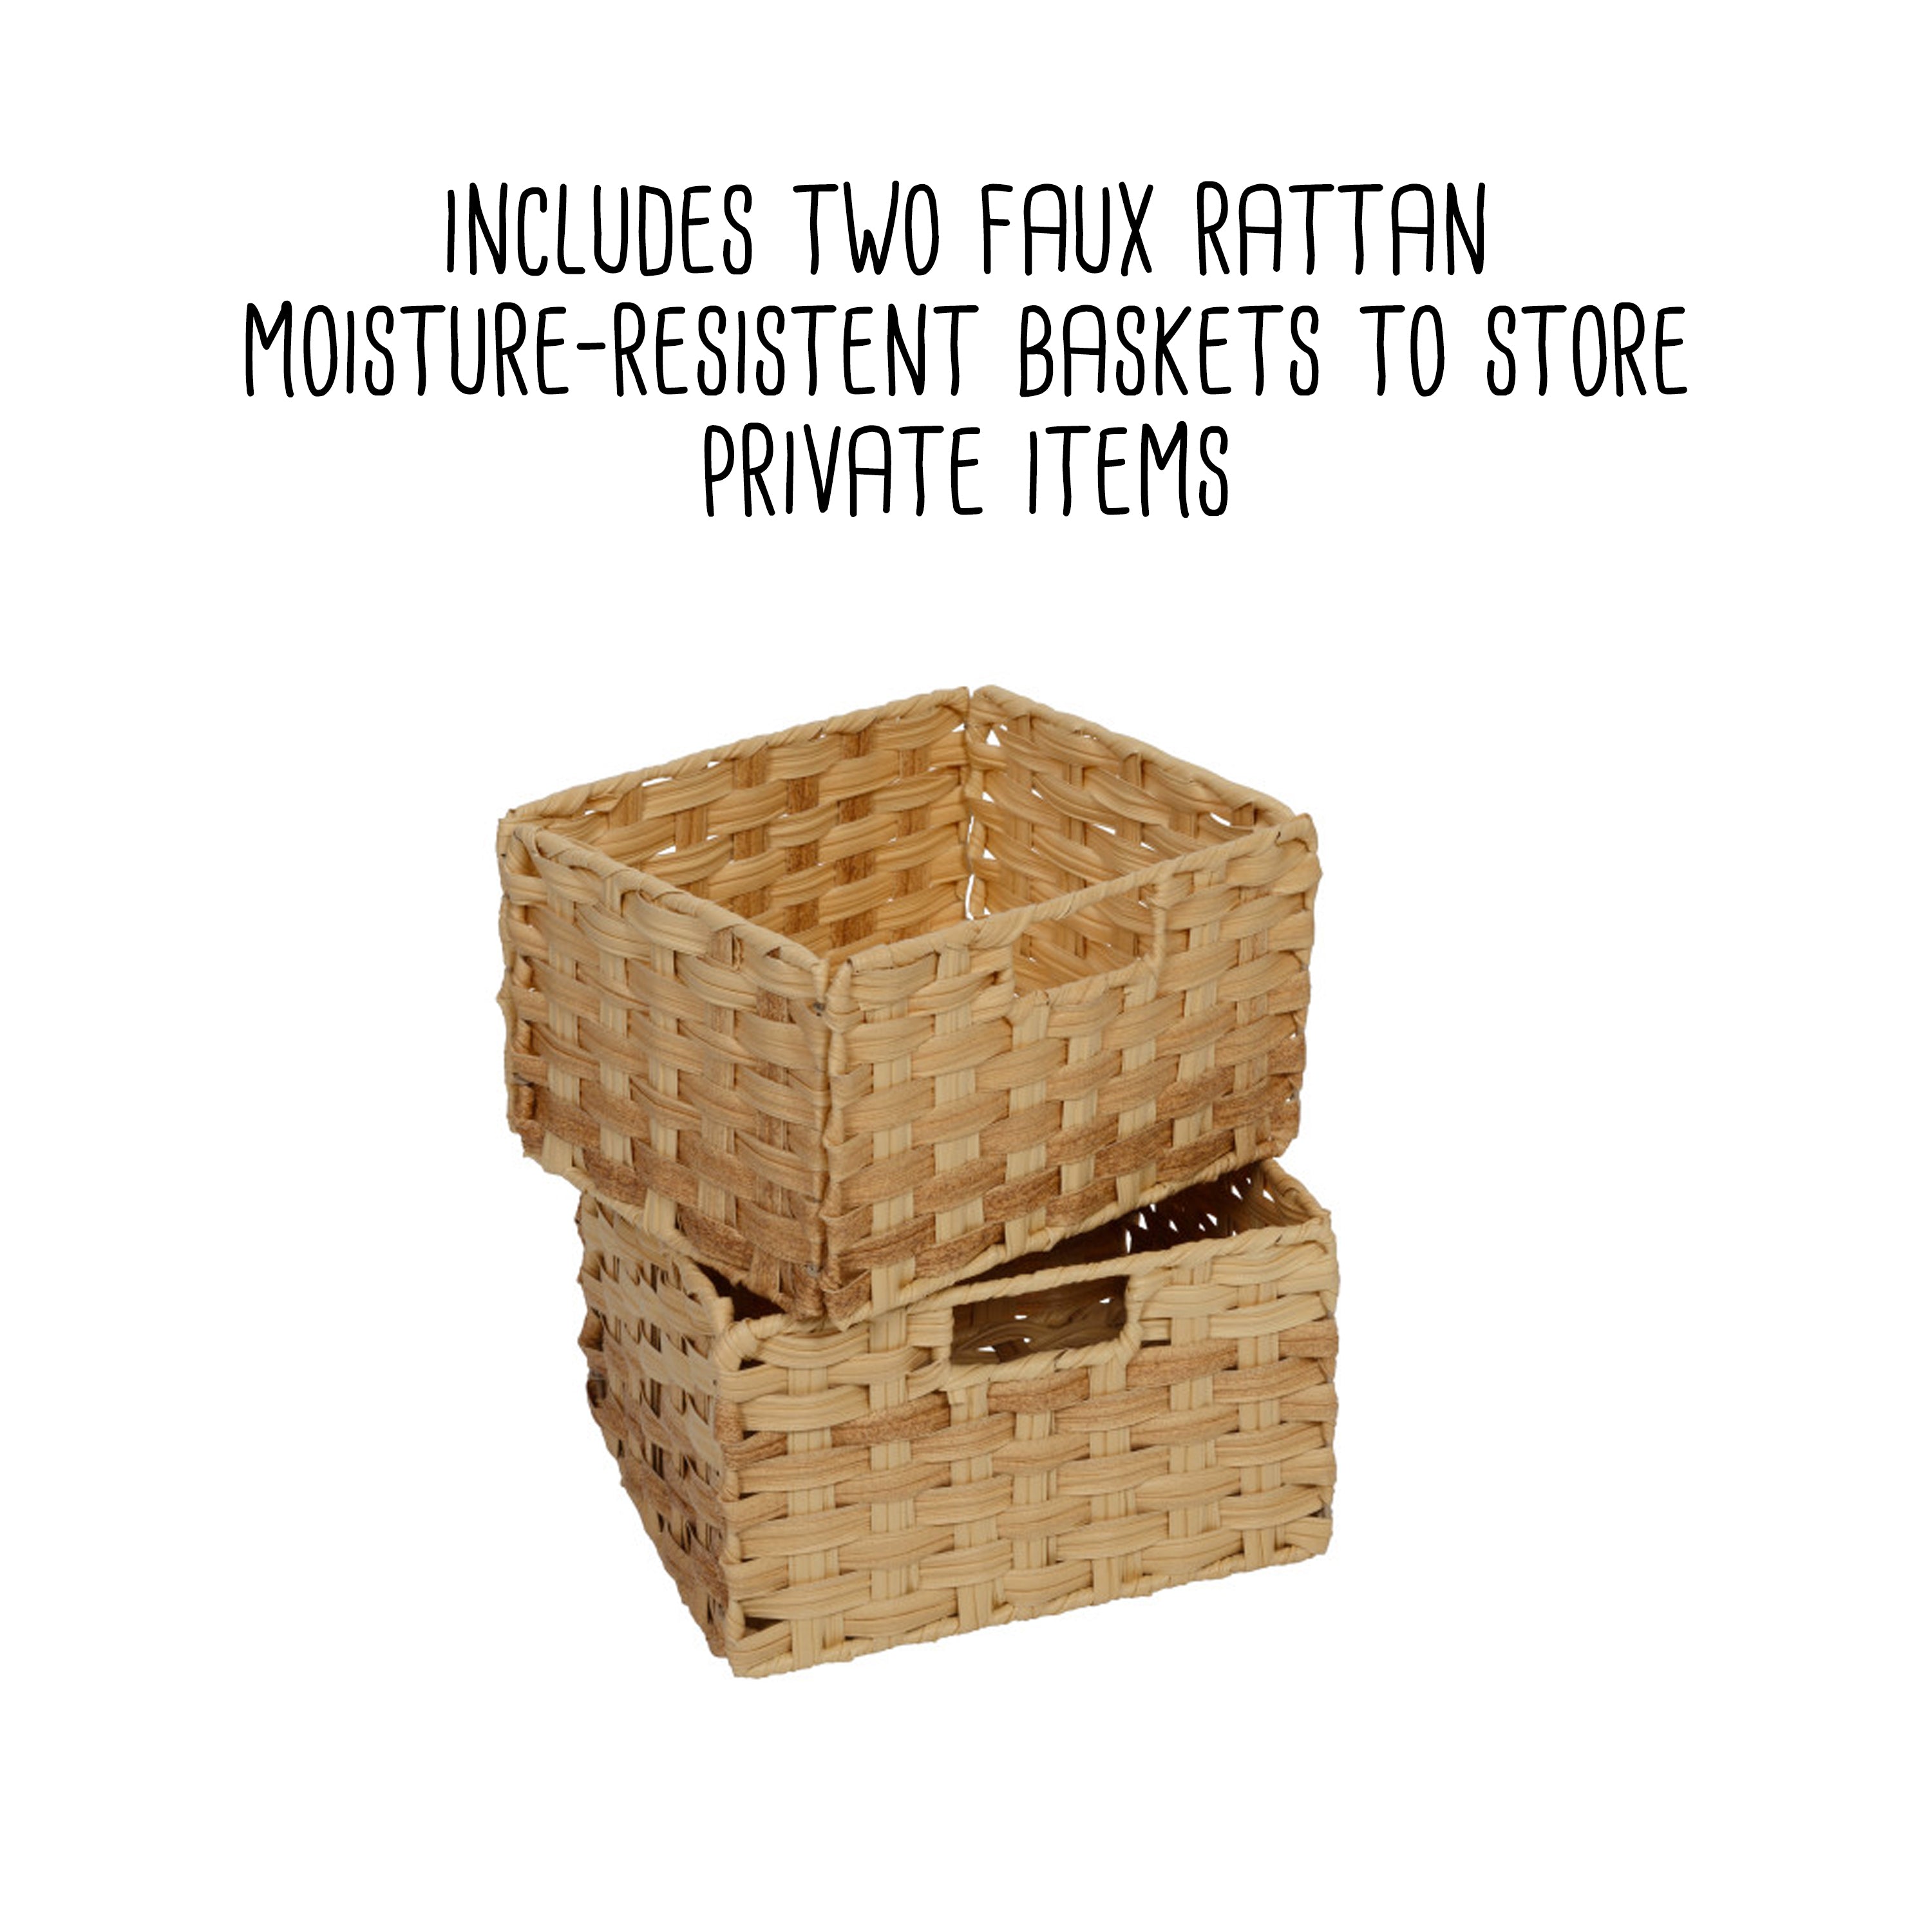 Bathroom Storage Baskets: Transform Your Space Today